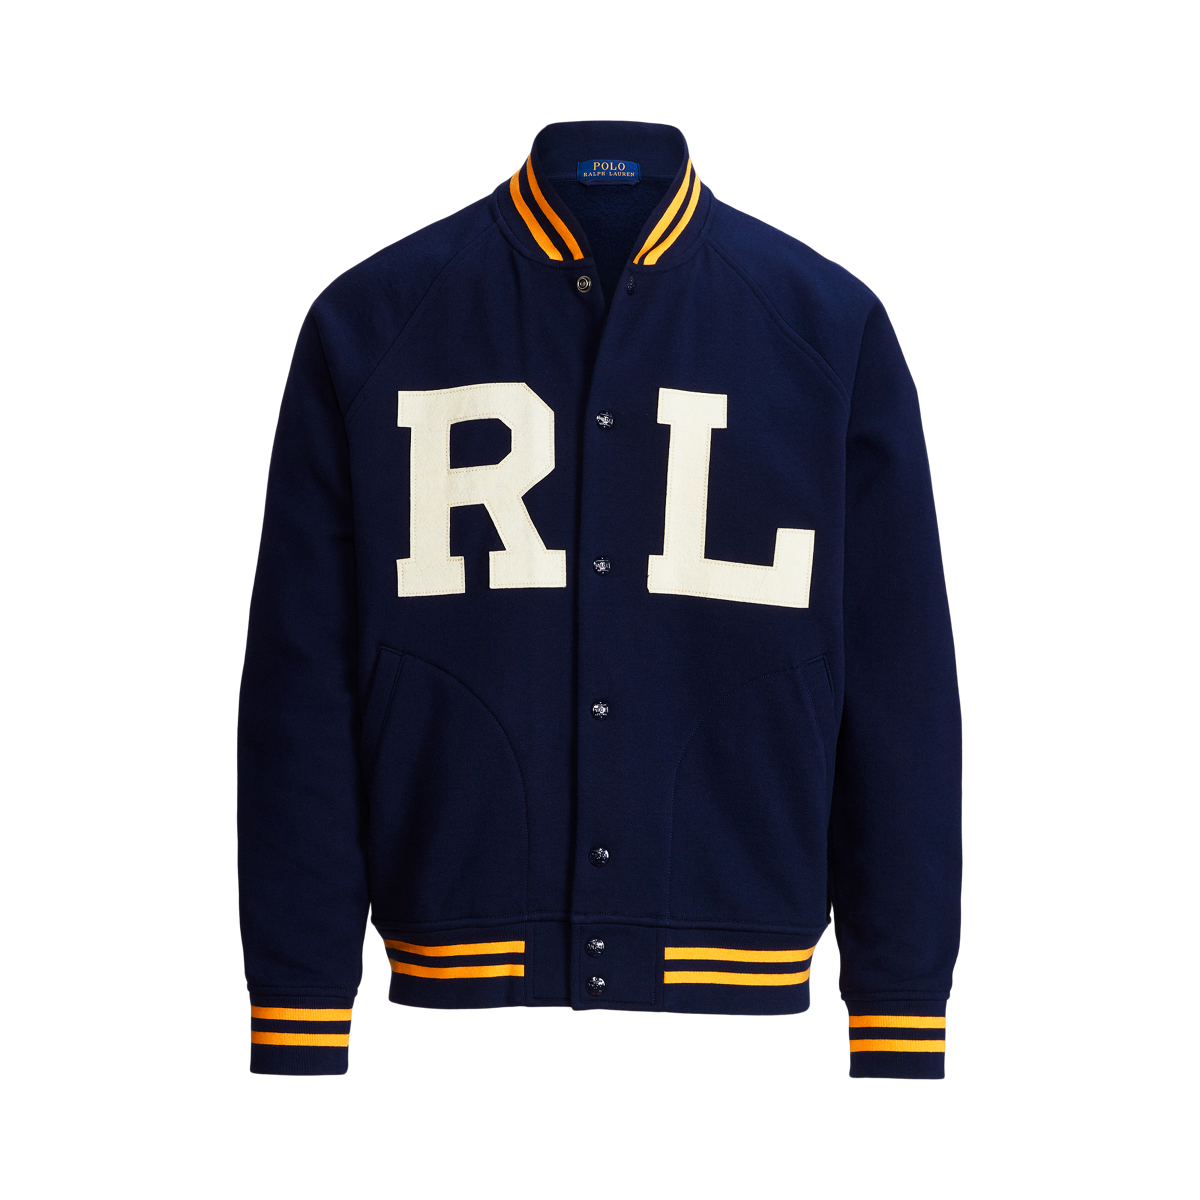 RL Letterman Jacket